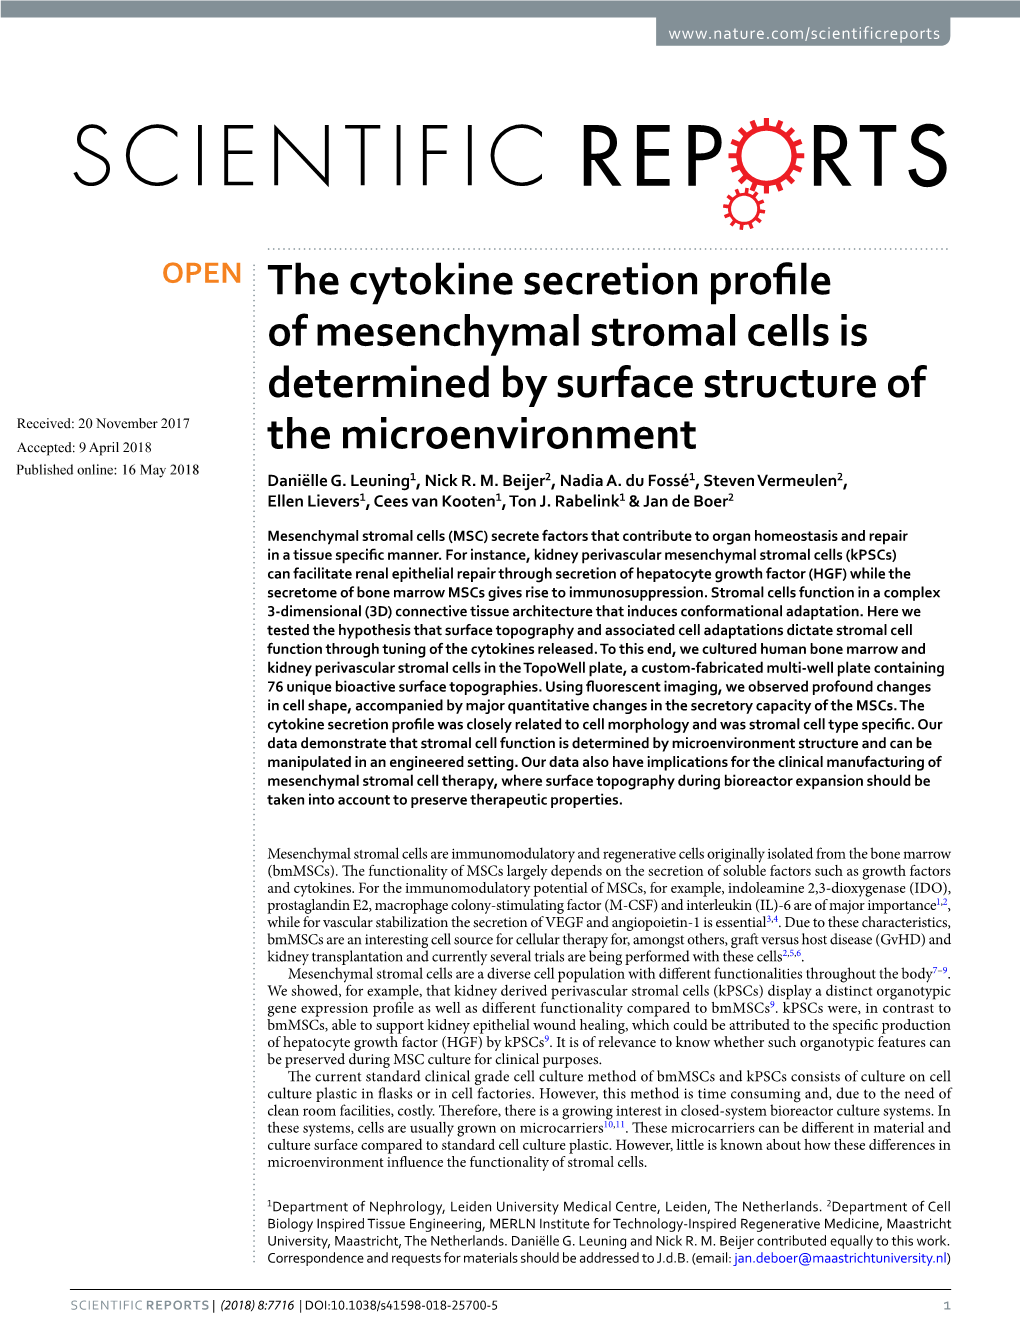 The Cytokine Secretion Profile of Mesenchymal Stromal Cells